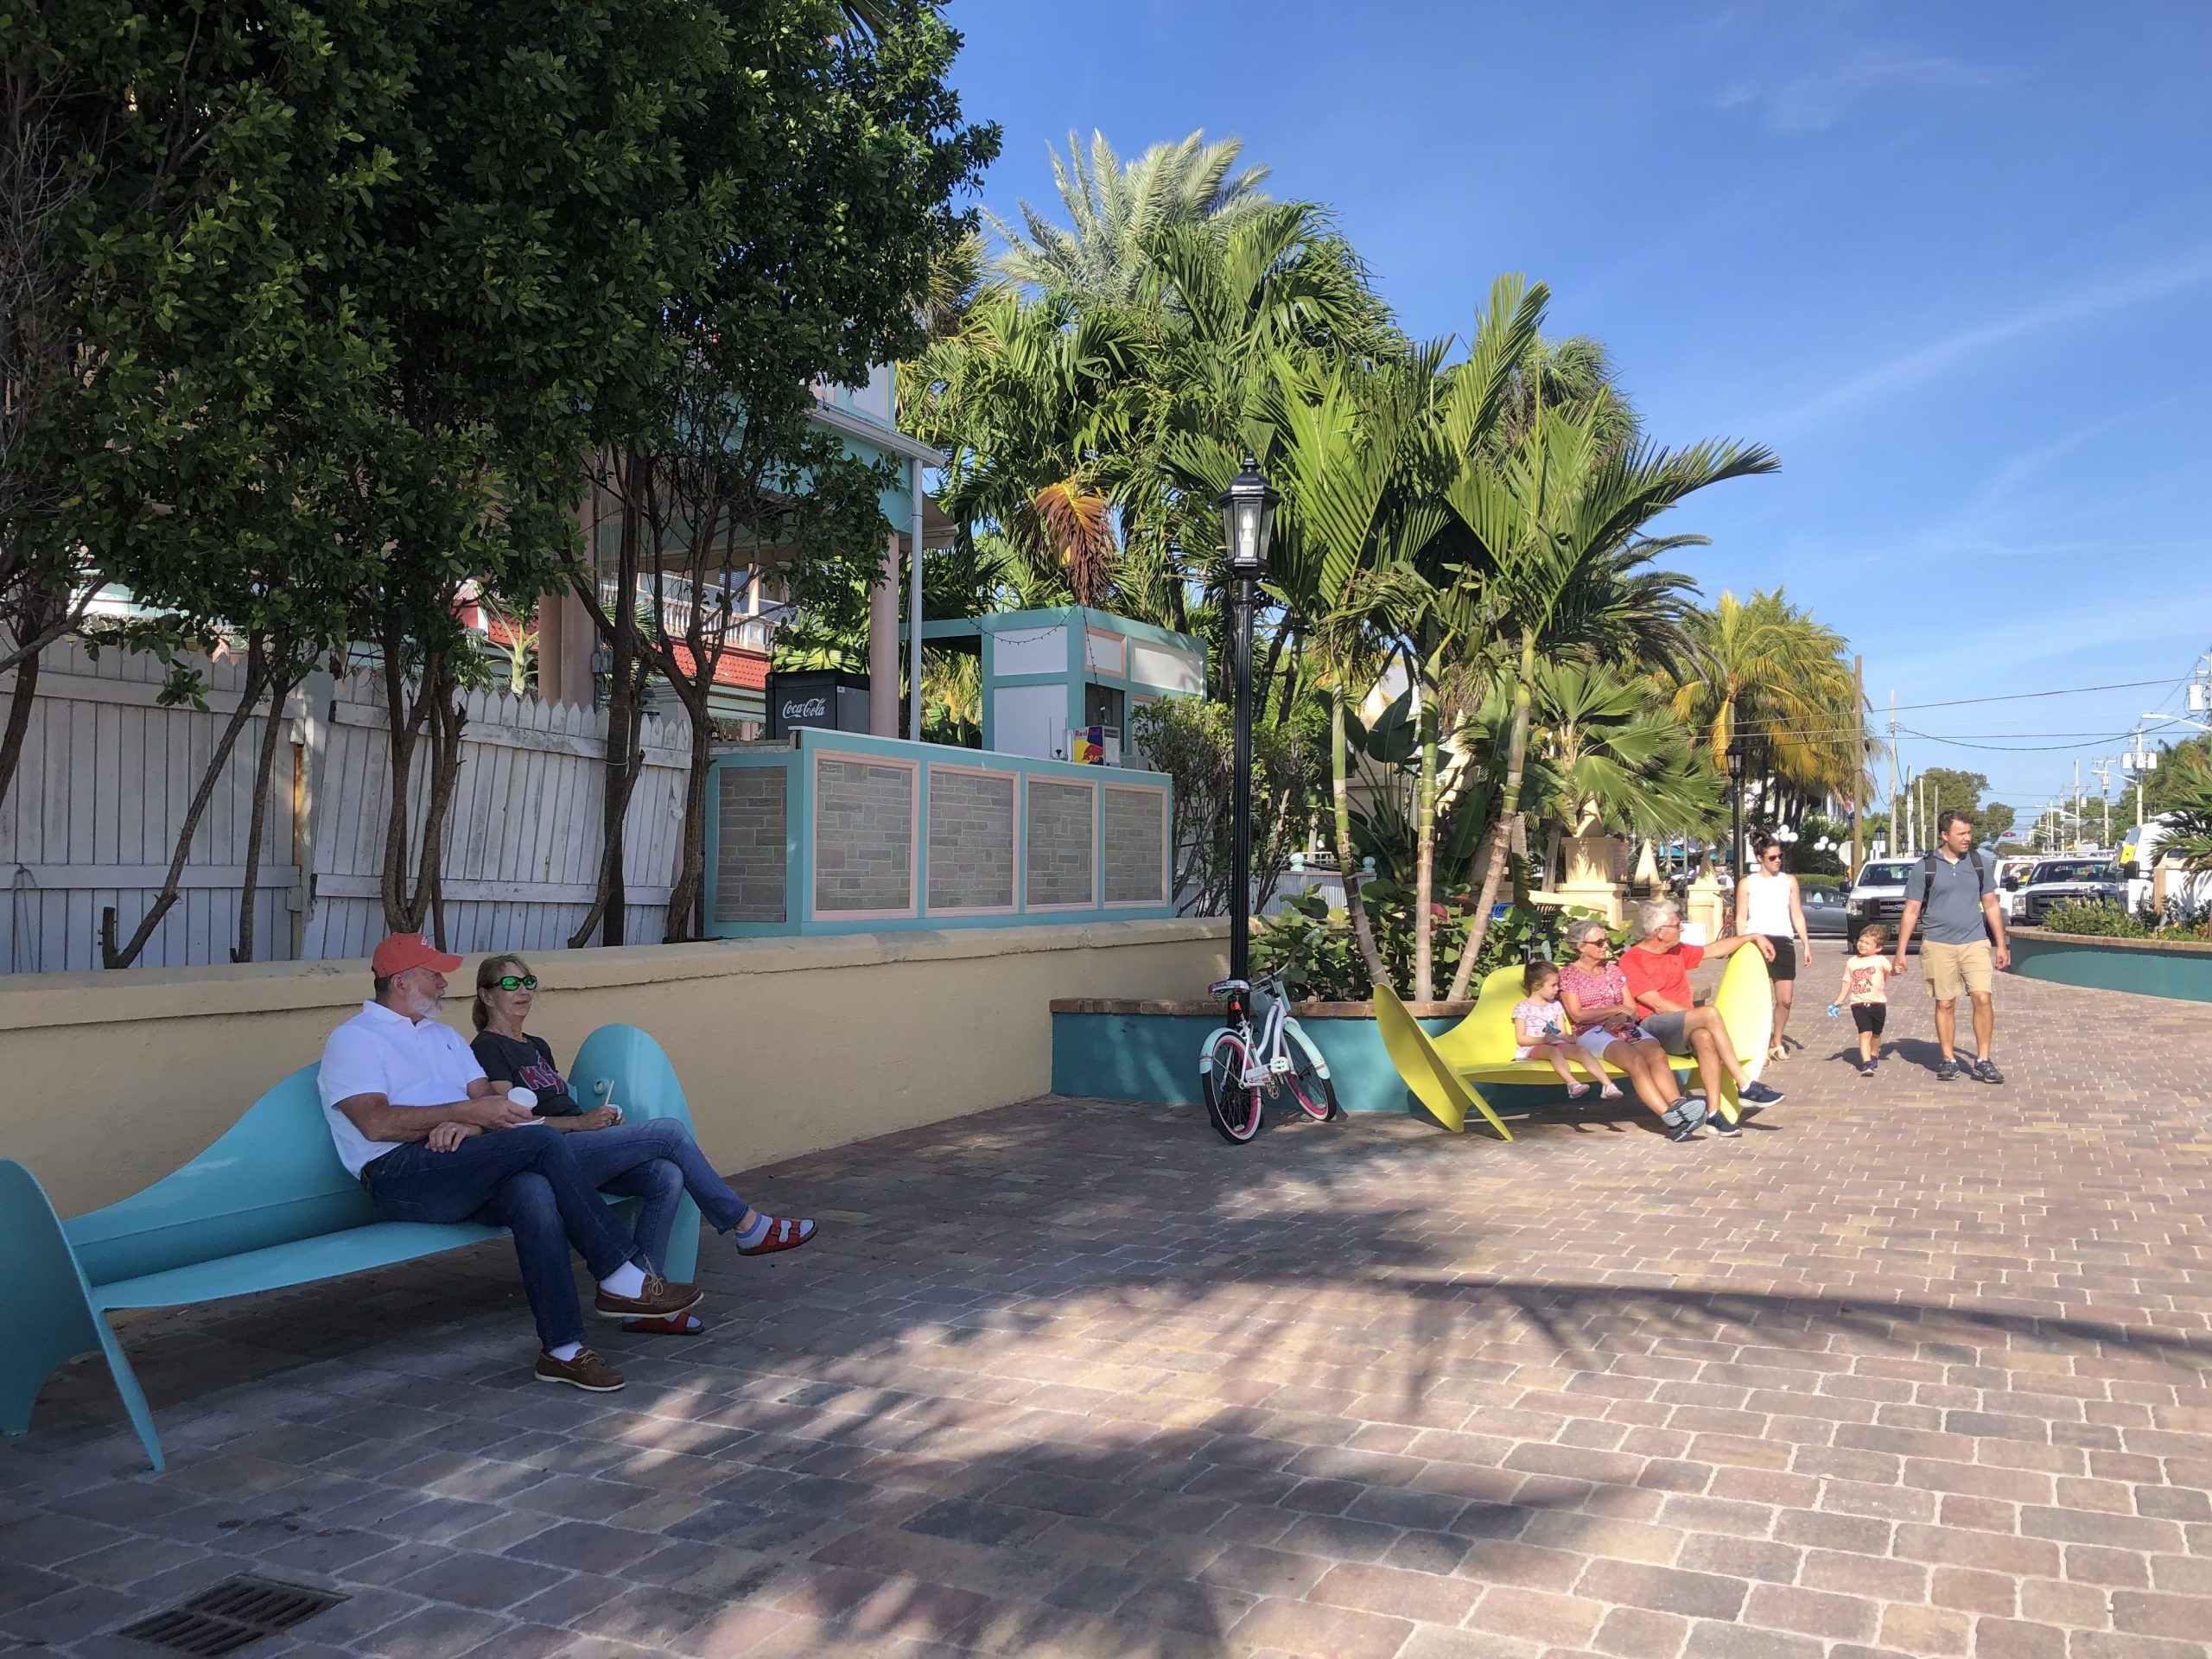 Key West Pedestrian Mall